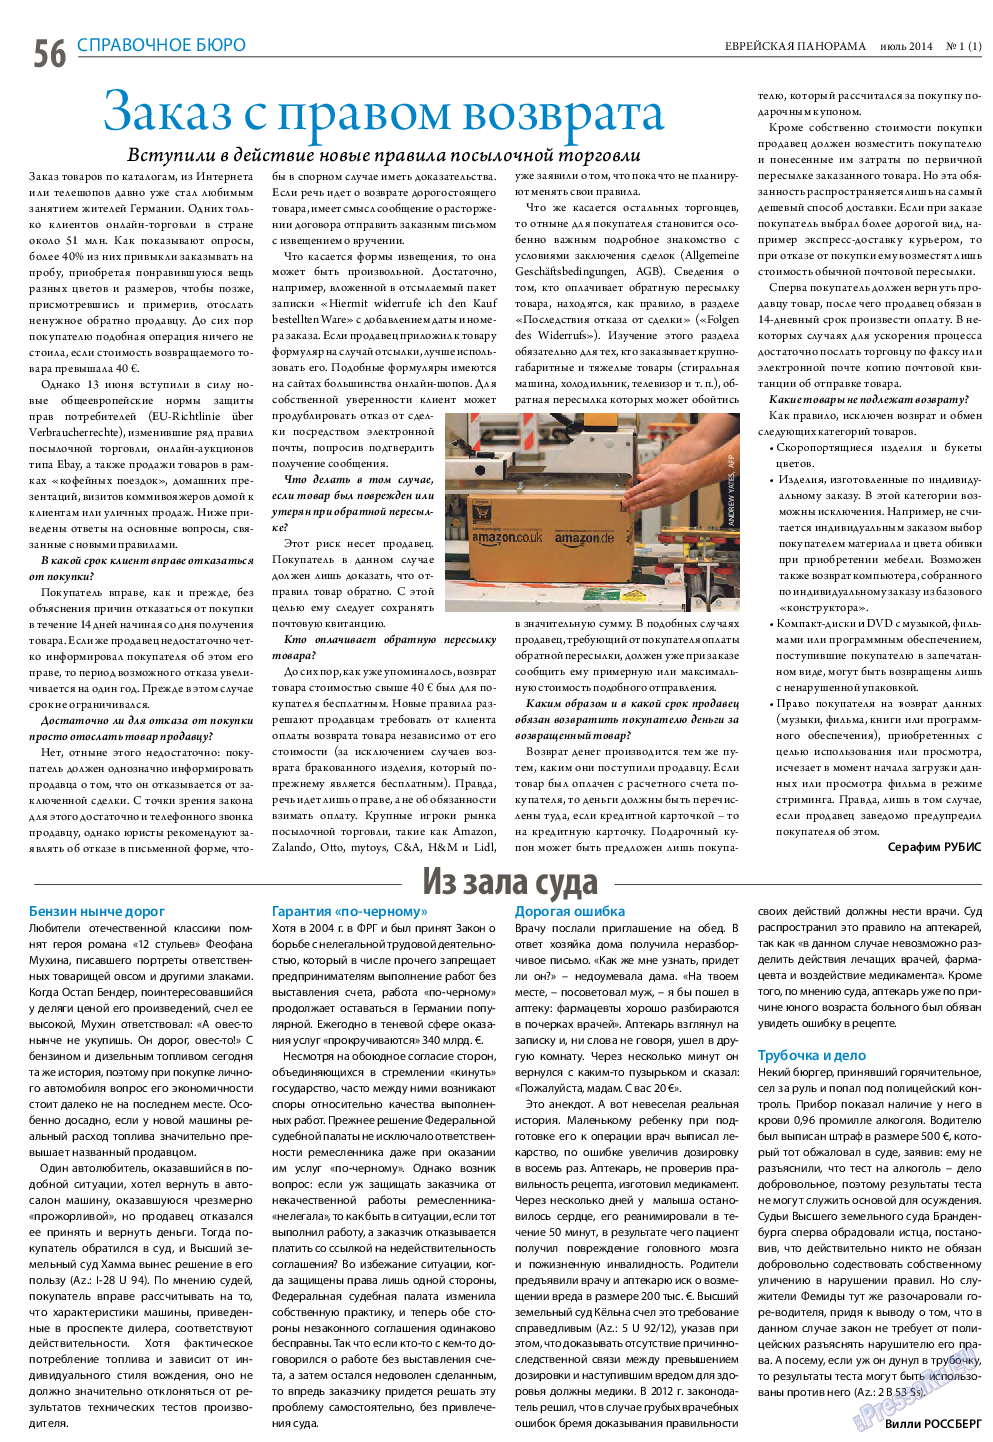 Еврейская панорама, газета. 2014 №1 стр.56